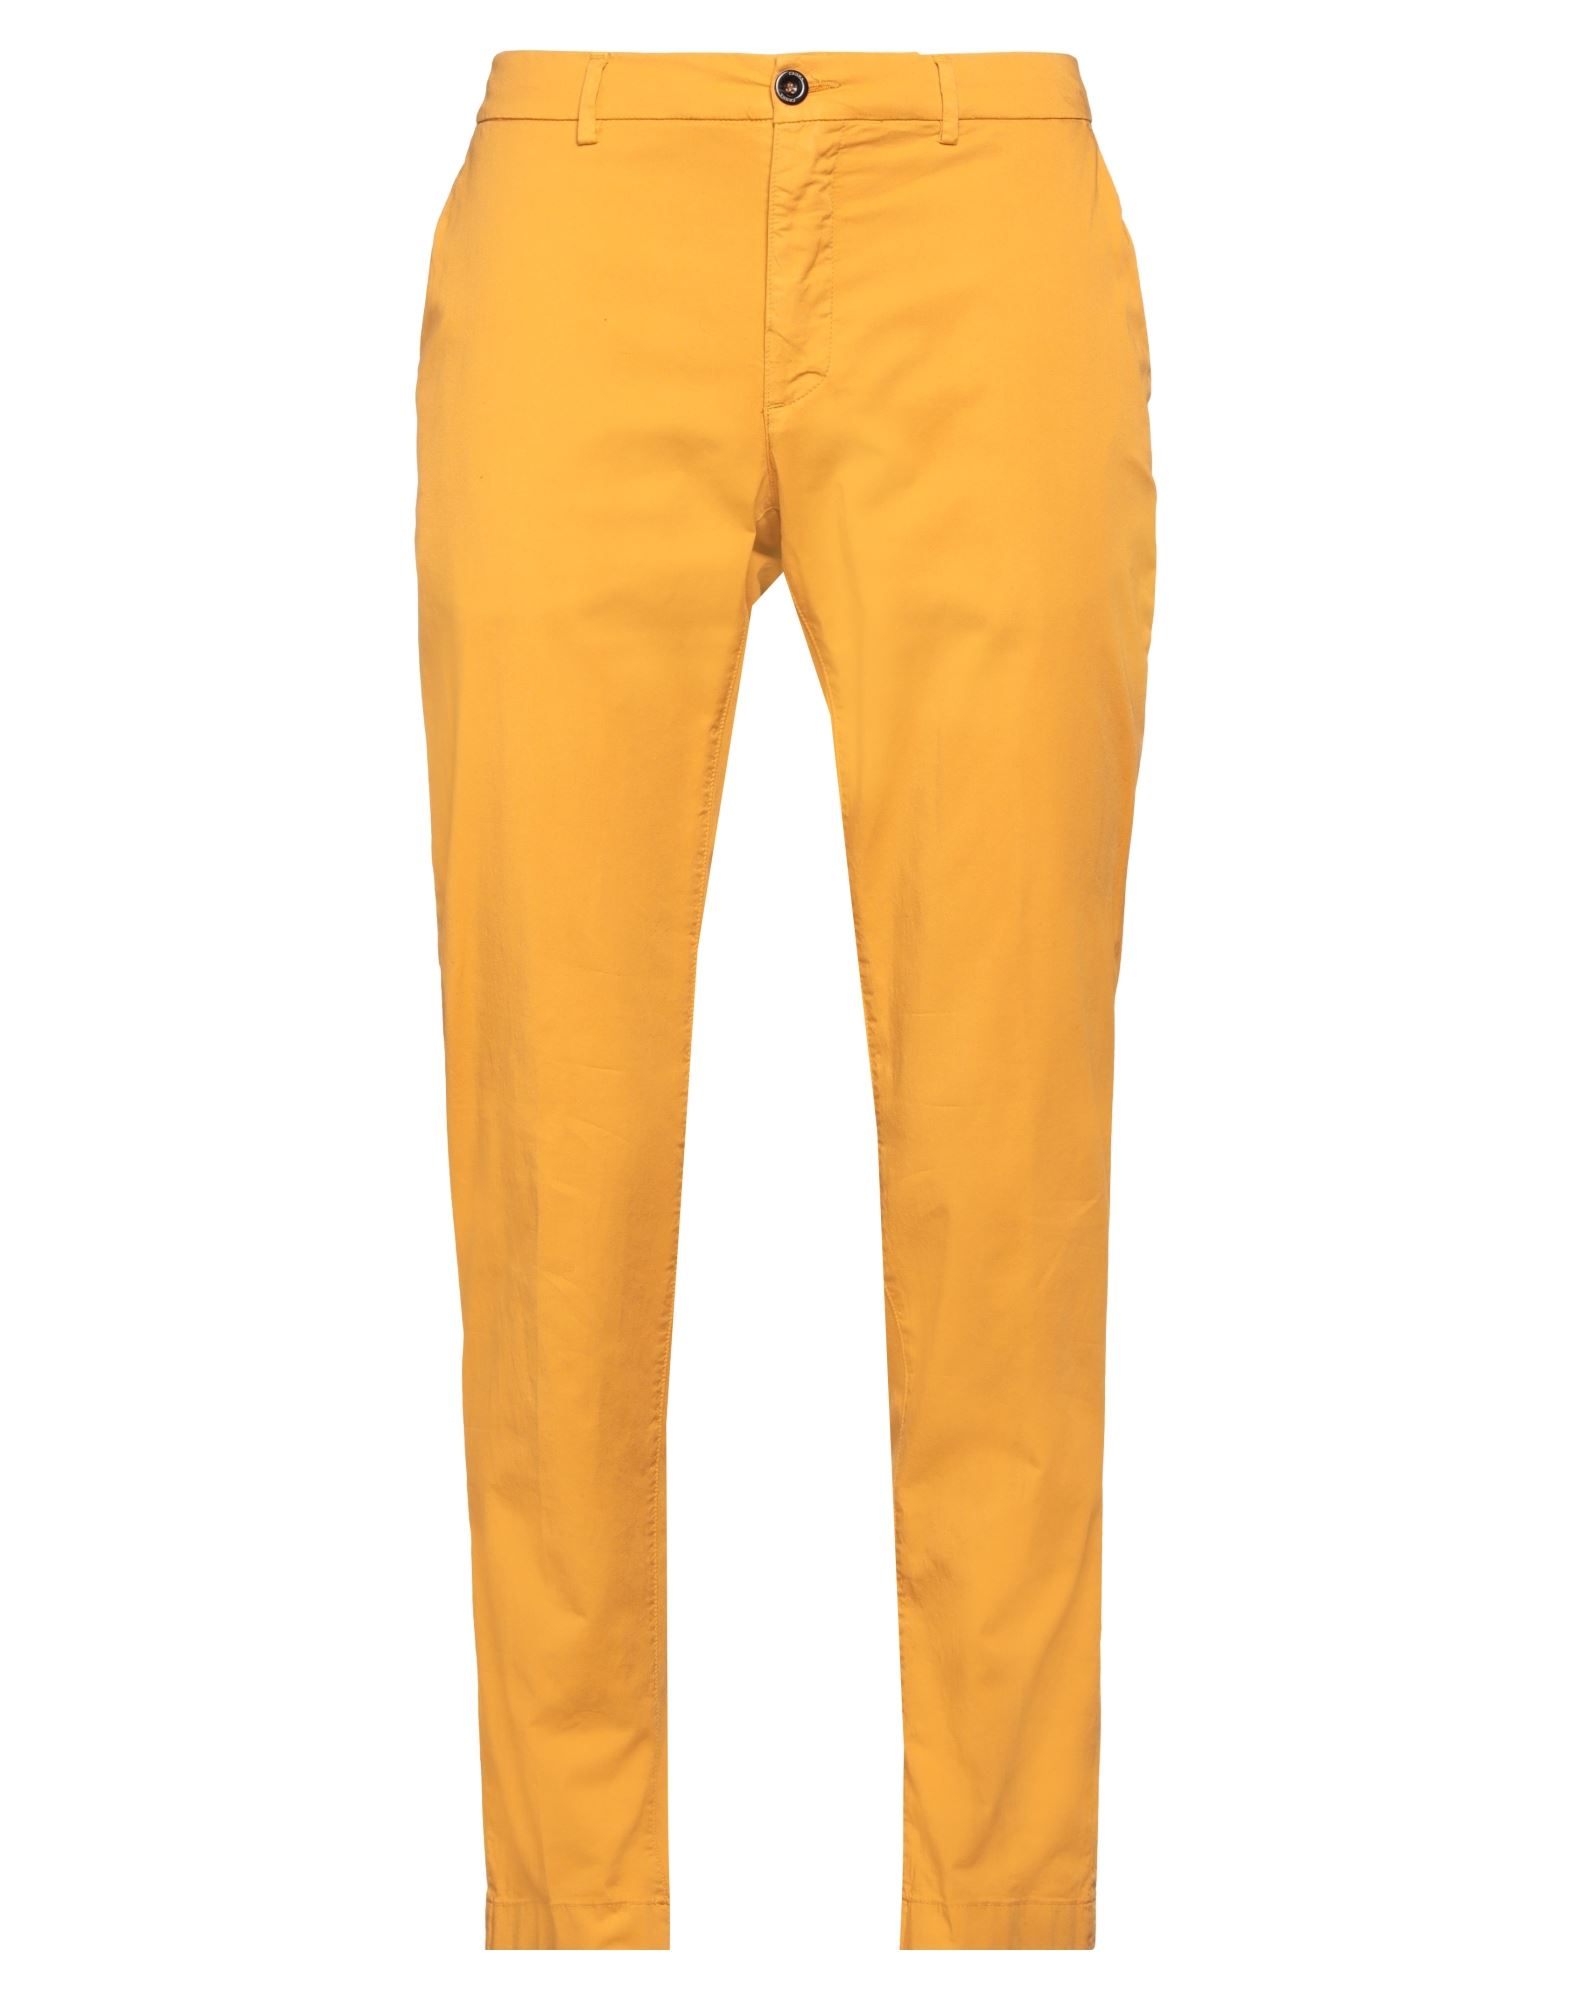 Cruna Pants In Orange